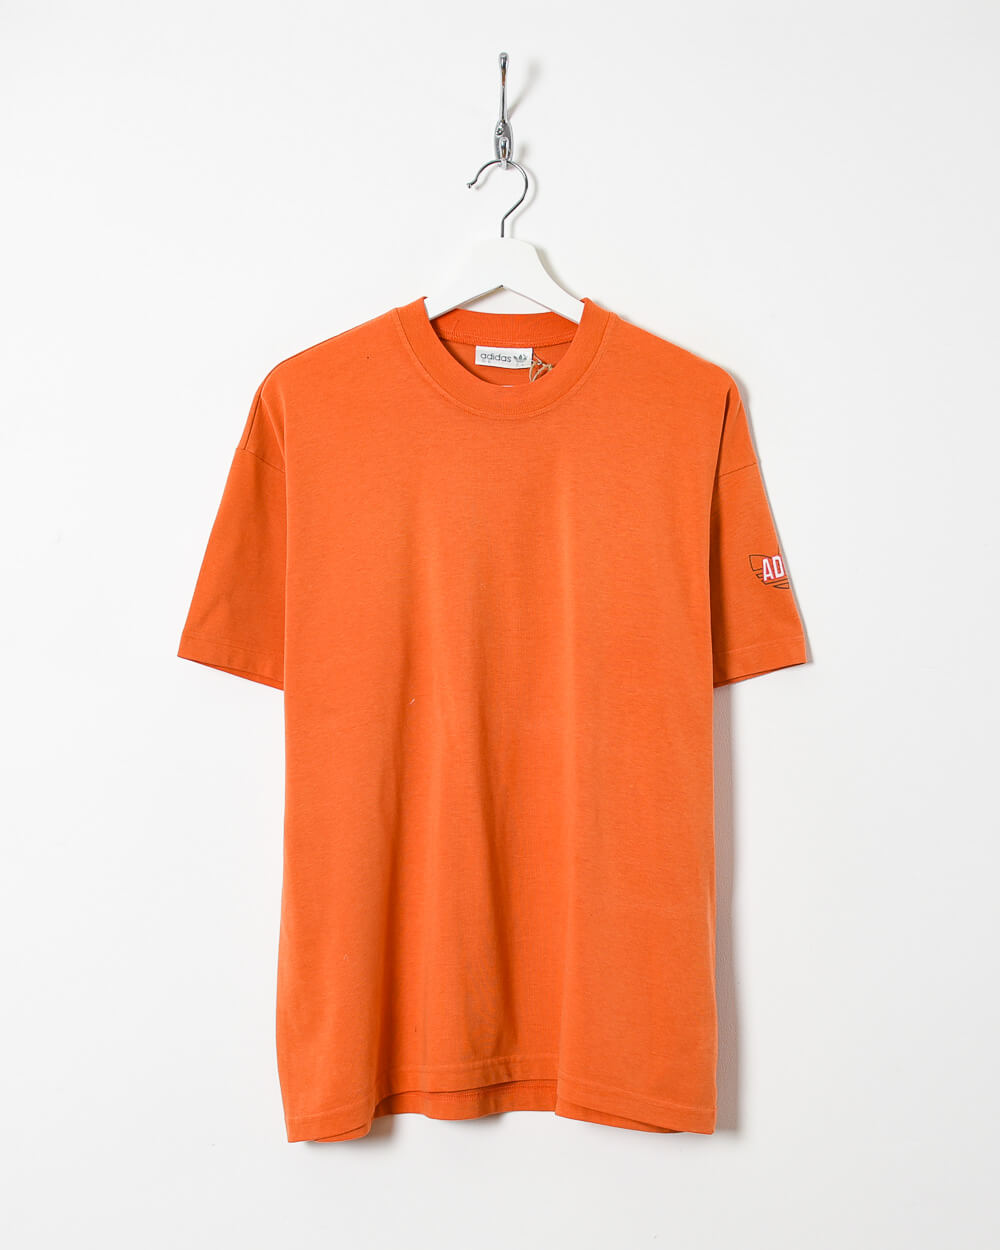 Orange Adidas T-Shirt - Medium